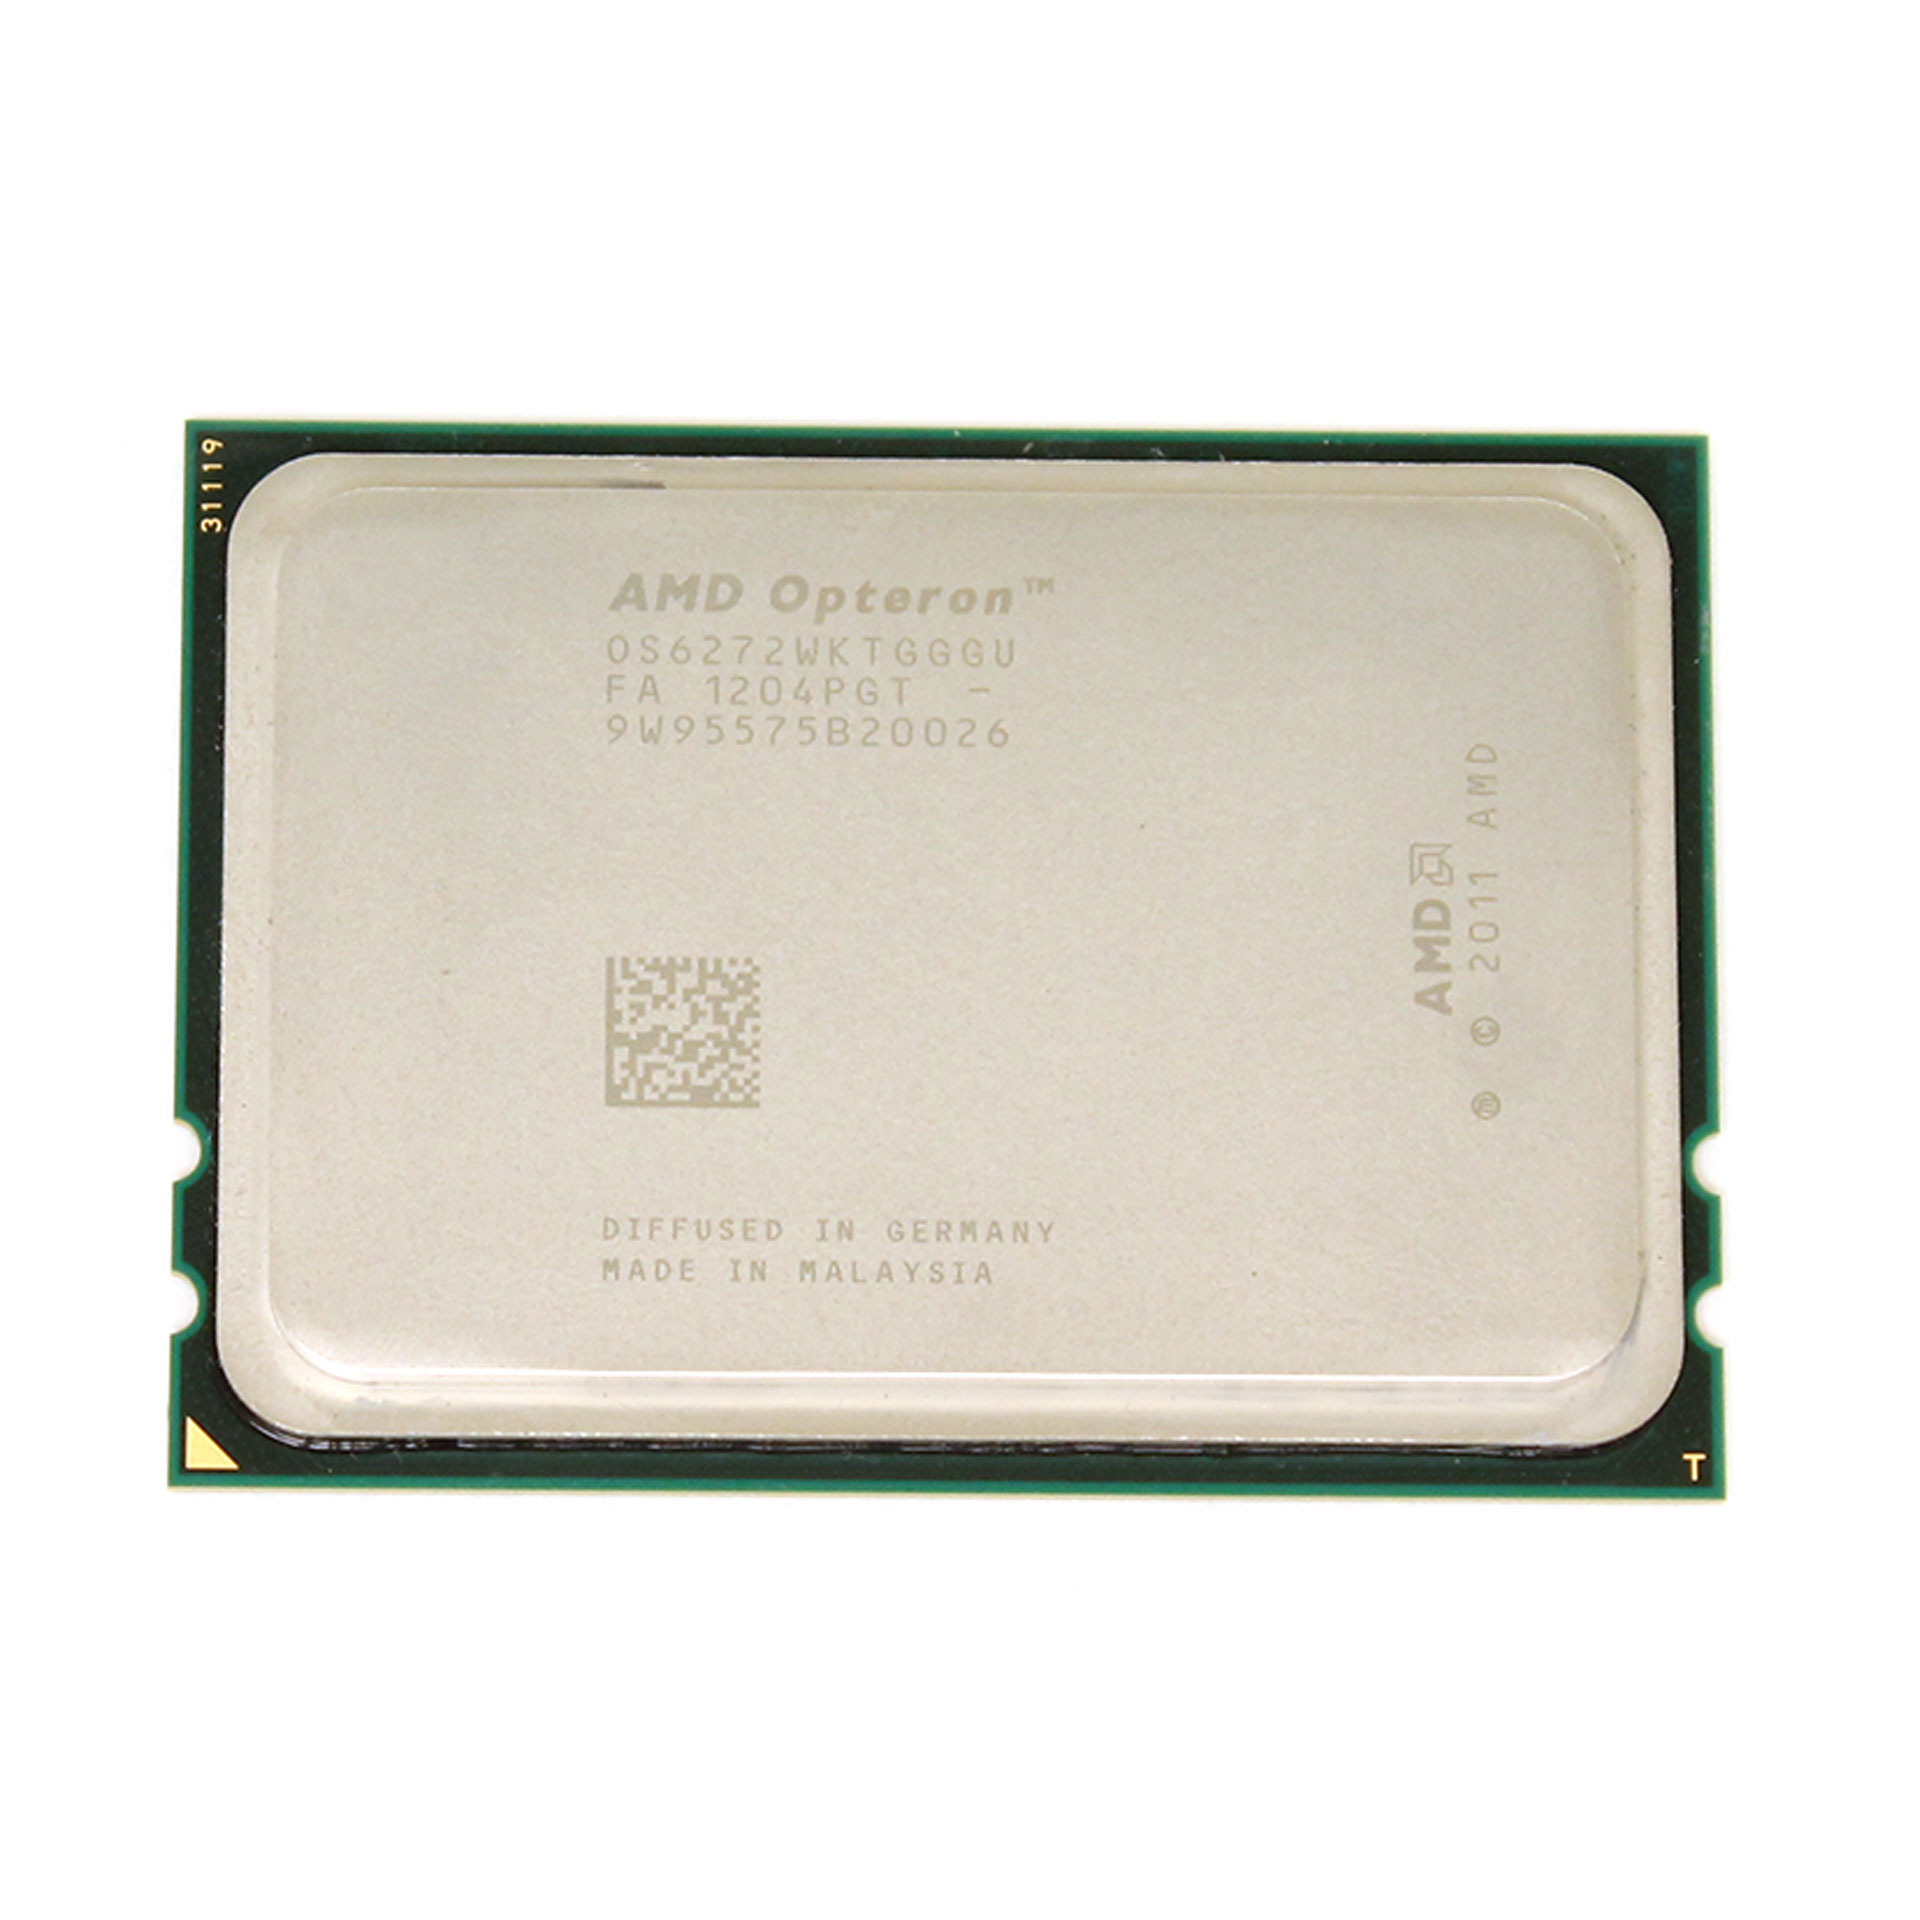 AMD Opteron 6272 Interlagos 2.1 GHz 16MB L3 Cache Socket G34